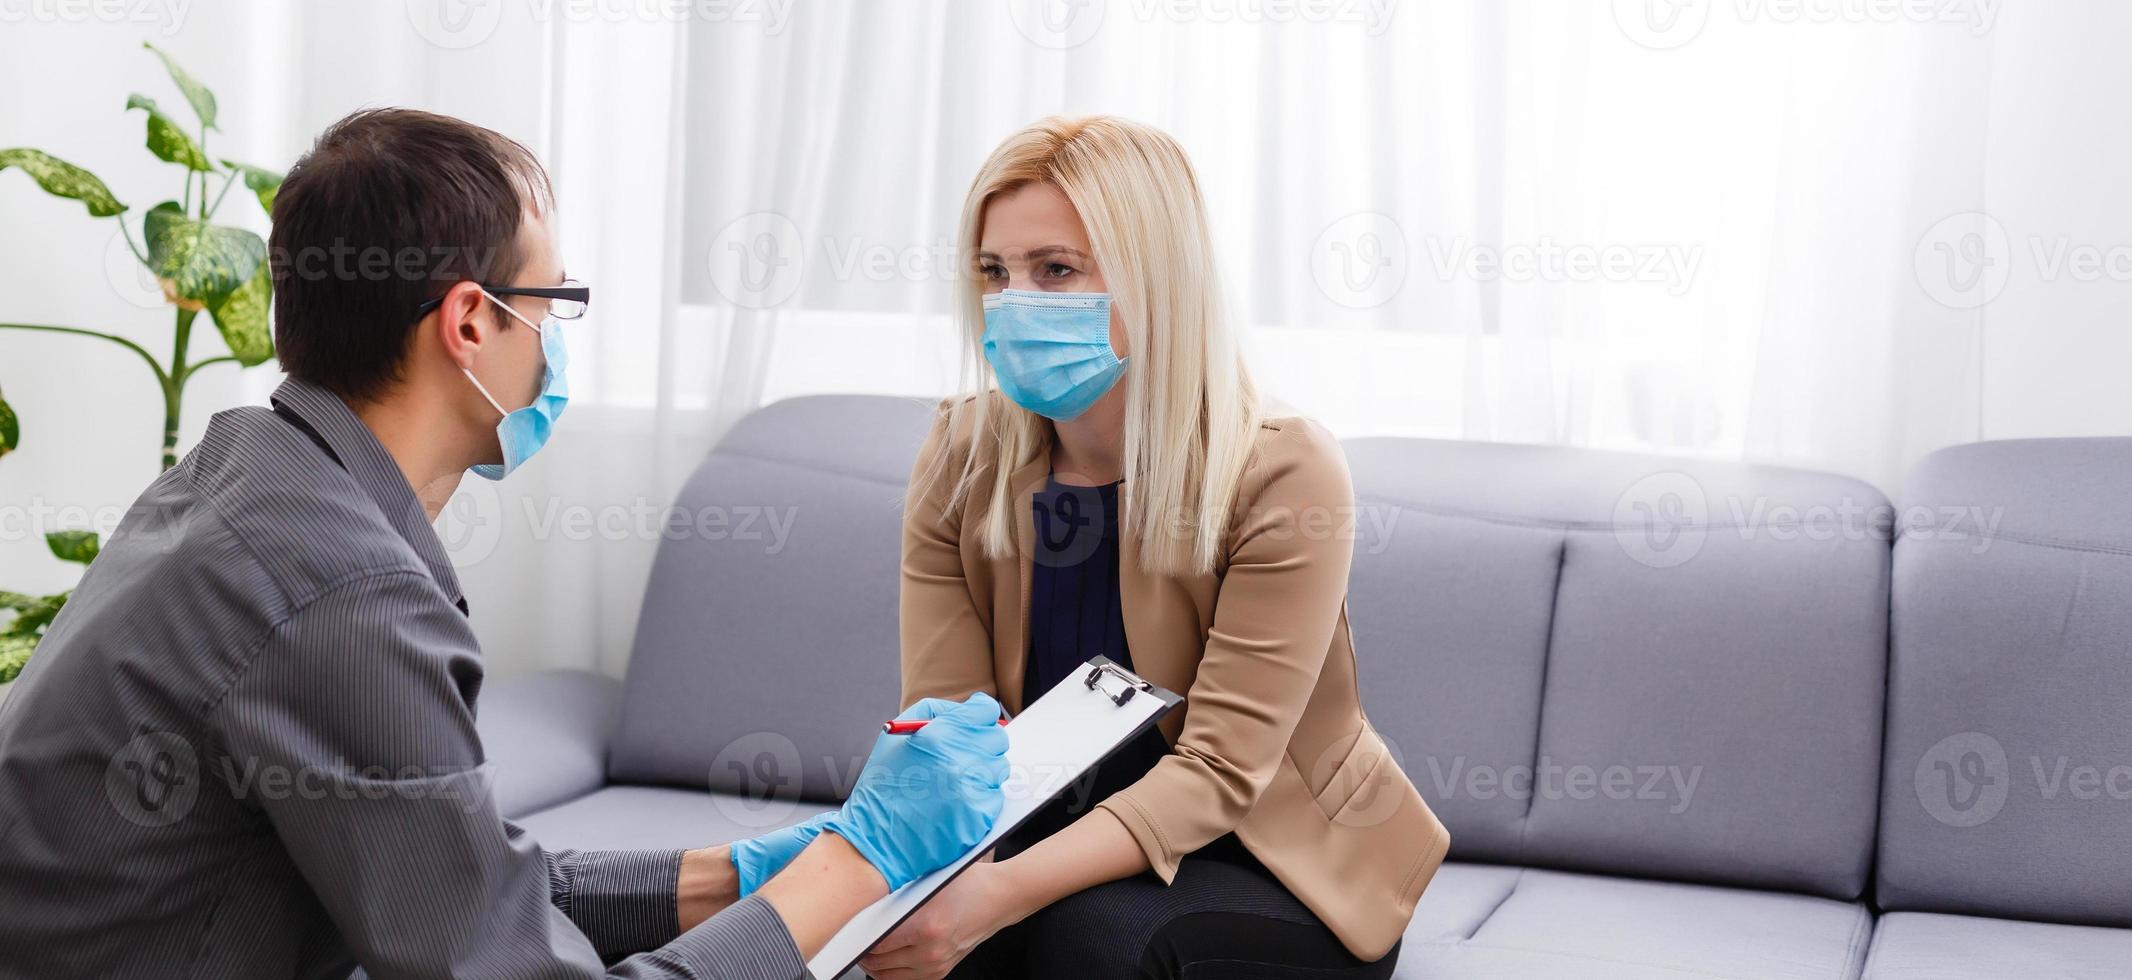 psychologist and patient during quarantine coronavirus photo